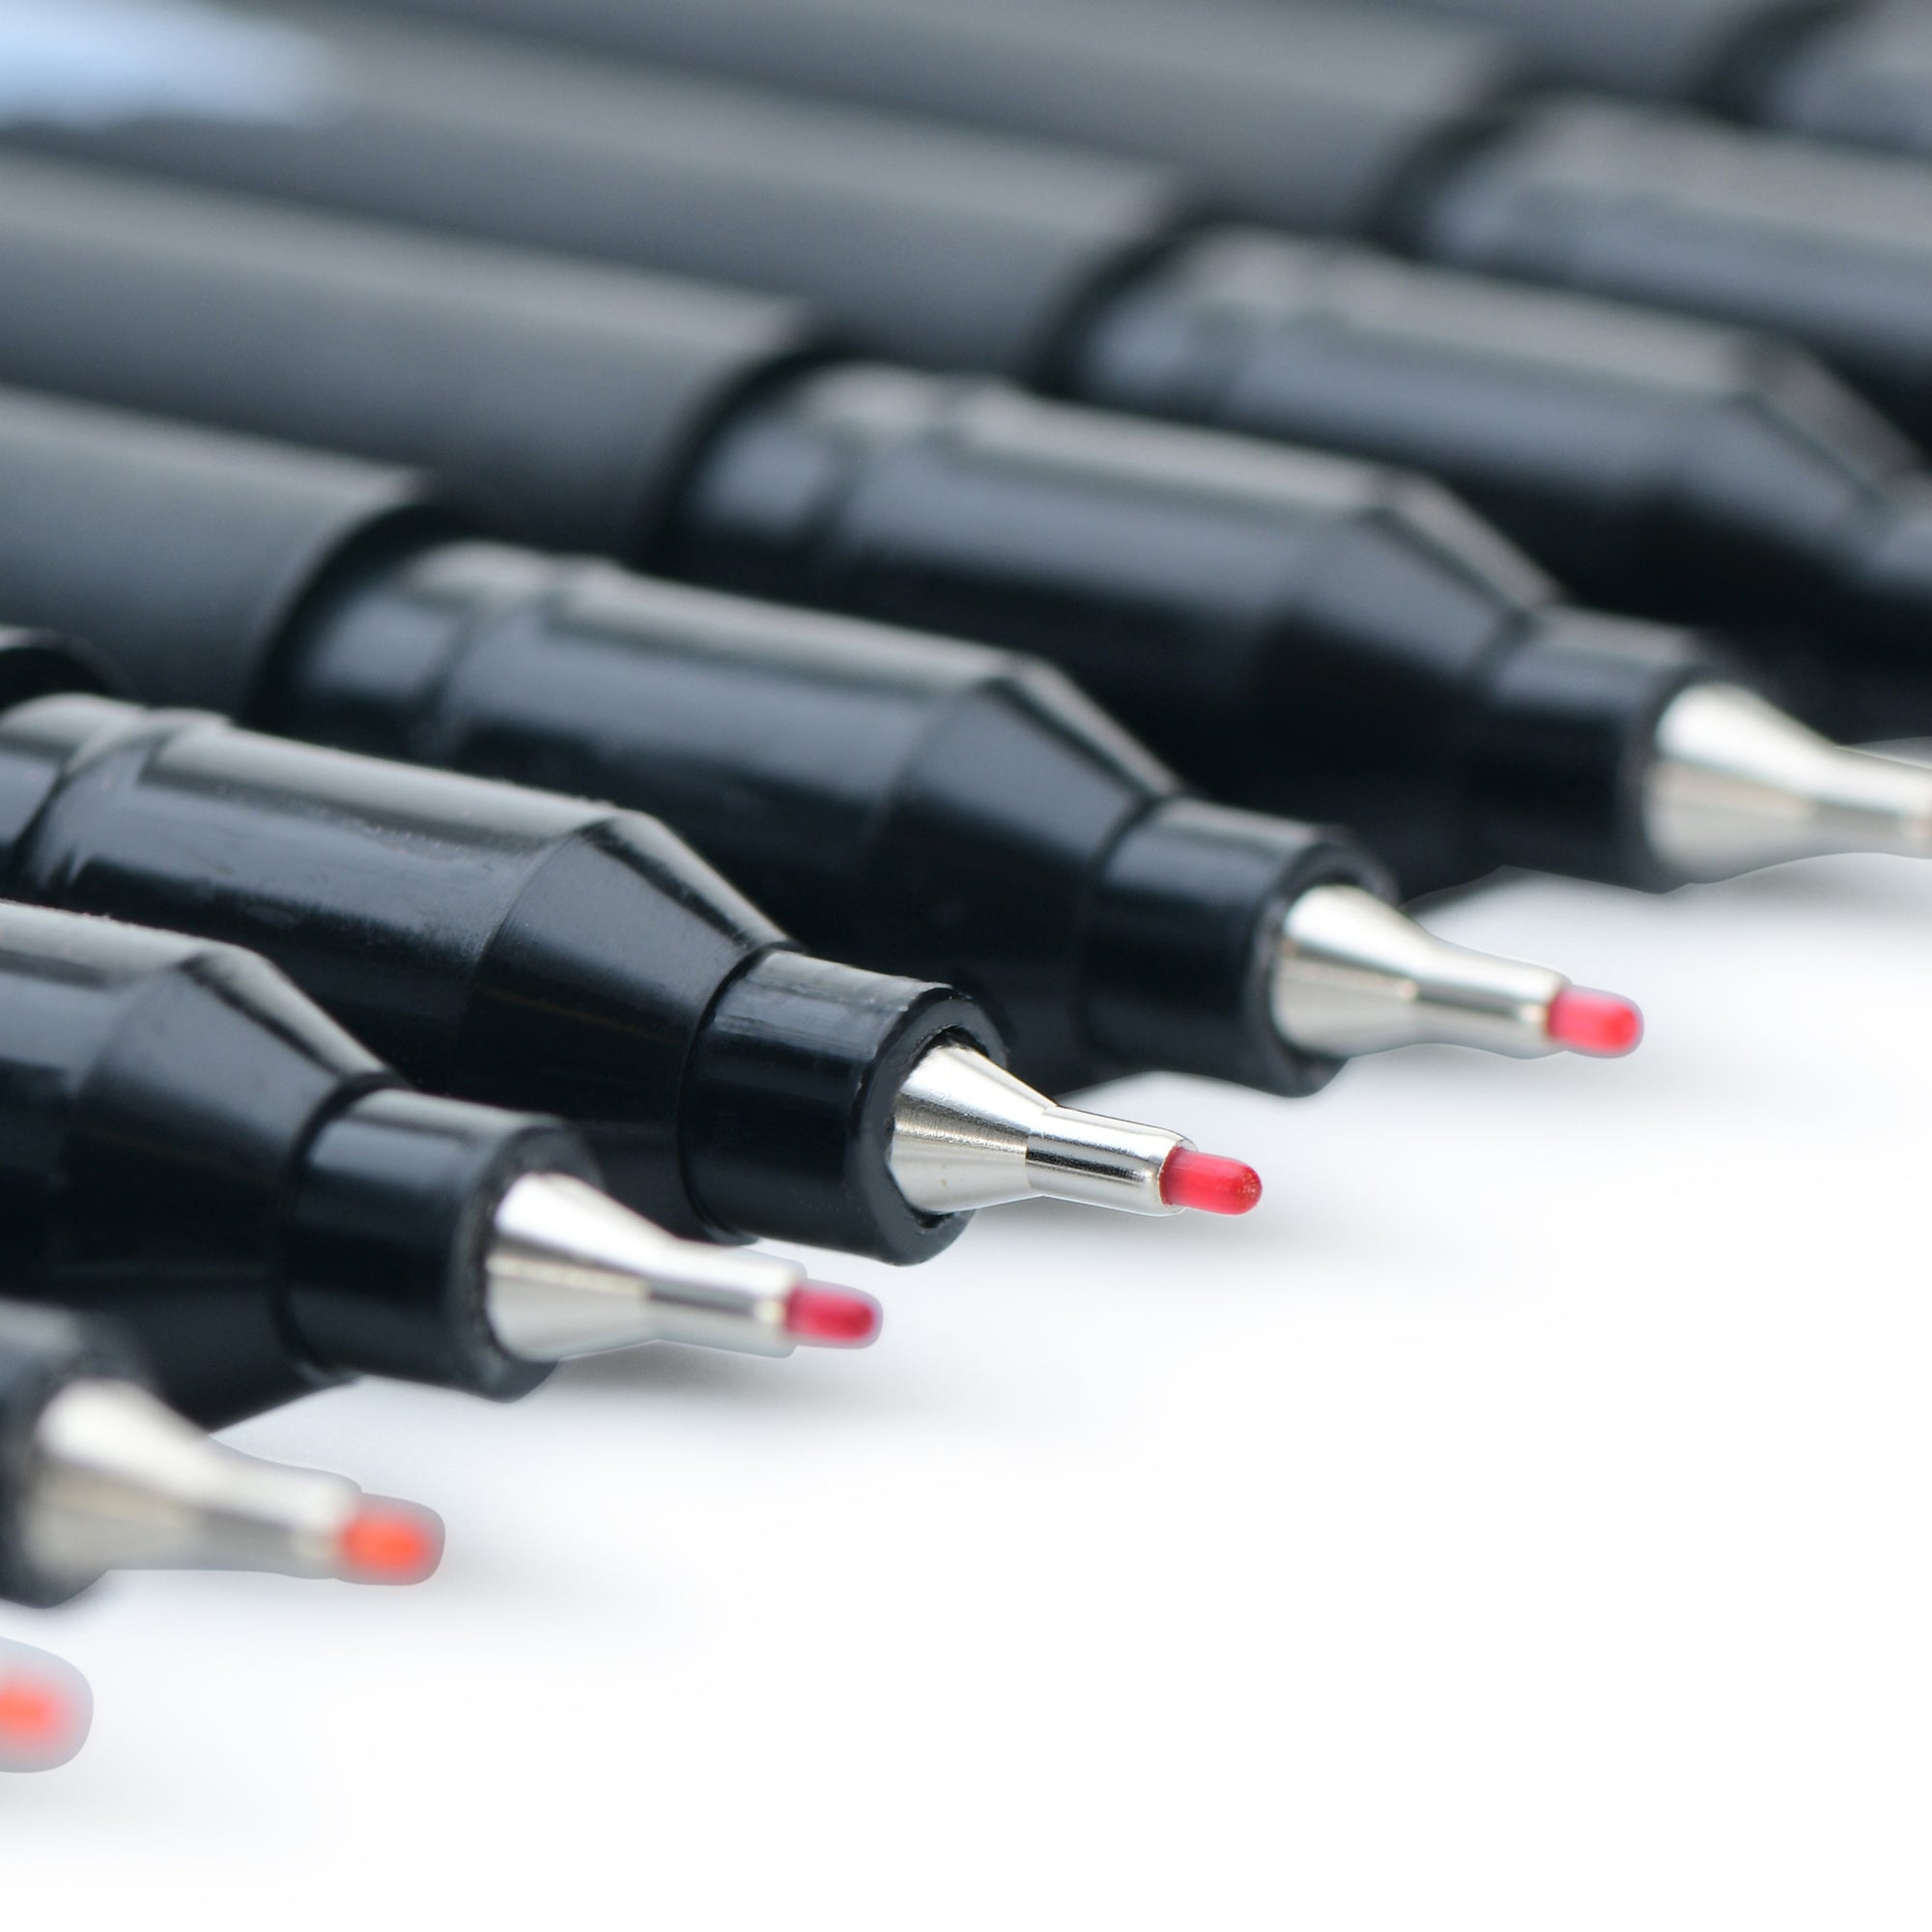 Wexford Brush Pens 7.56 x 9.25 x1.18in